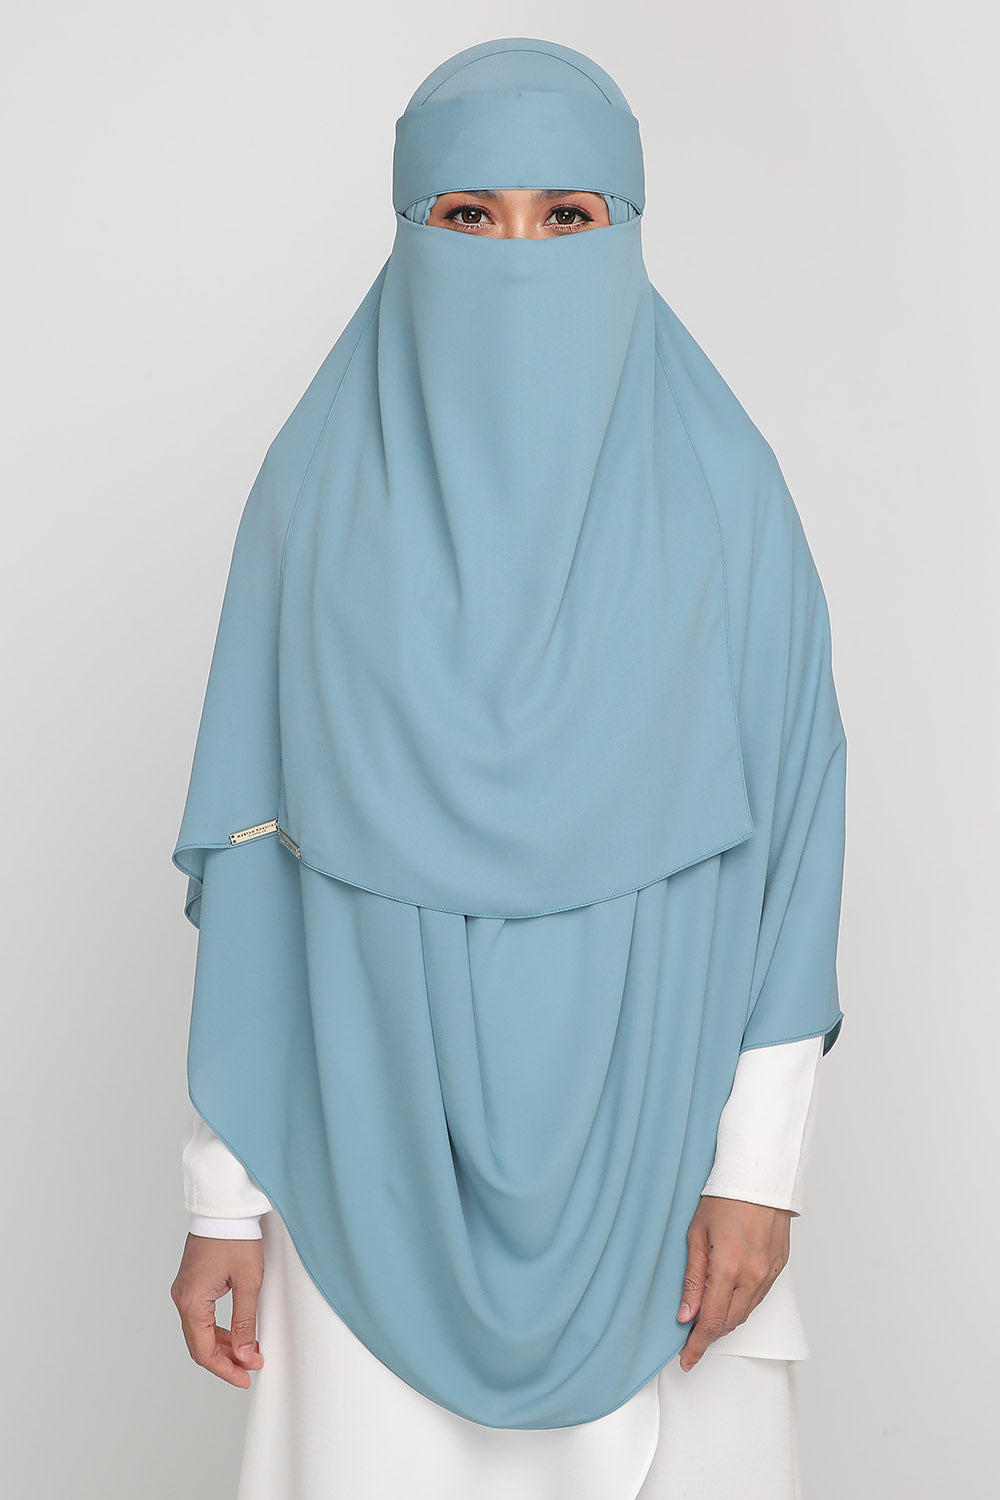 Niqab Mega Instant Blue Munsell